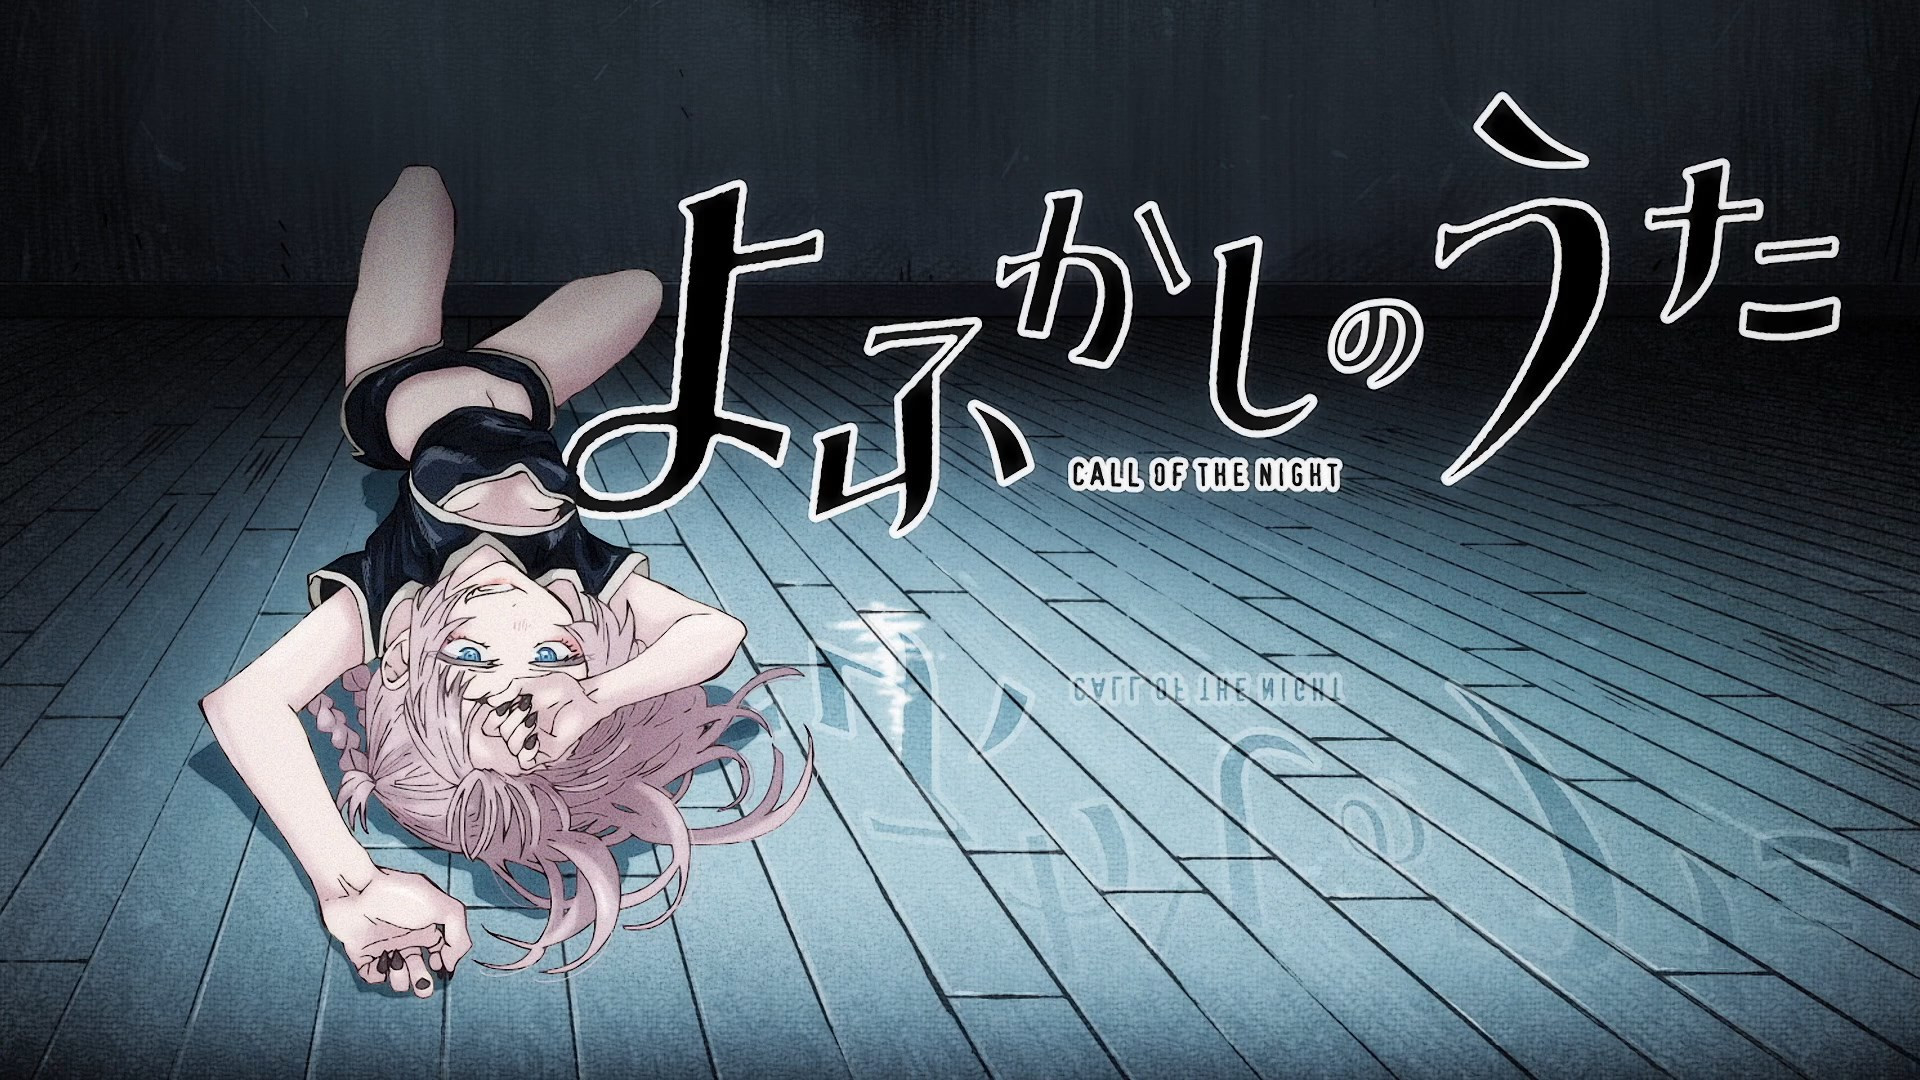 Call of the Night or Yofukashi no Uta White Title Text Anime Cover